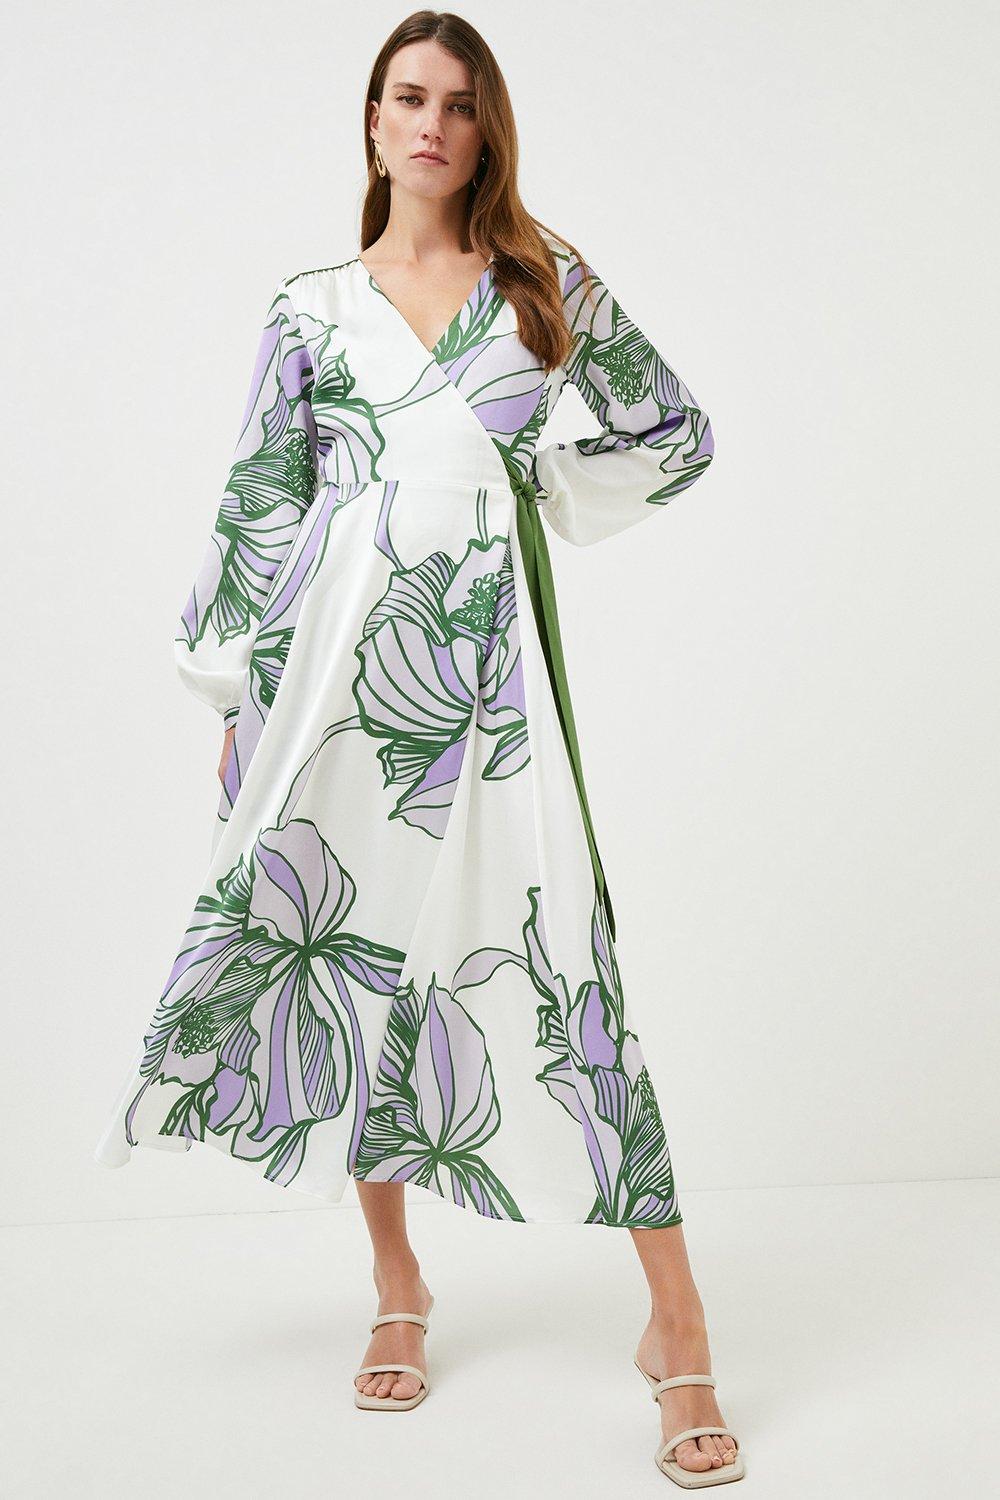 Cream Graphic Floral Wrap Woven Midi Dress Green Purple Wedding Guest Outfit Karen Millen